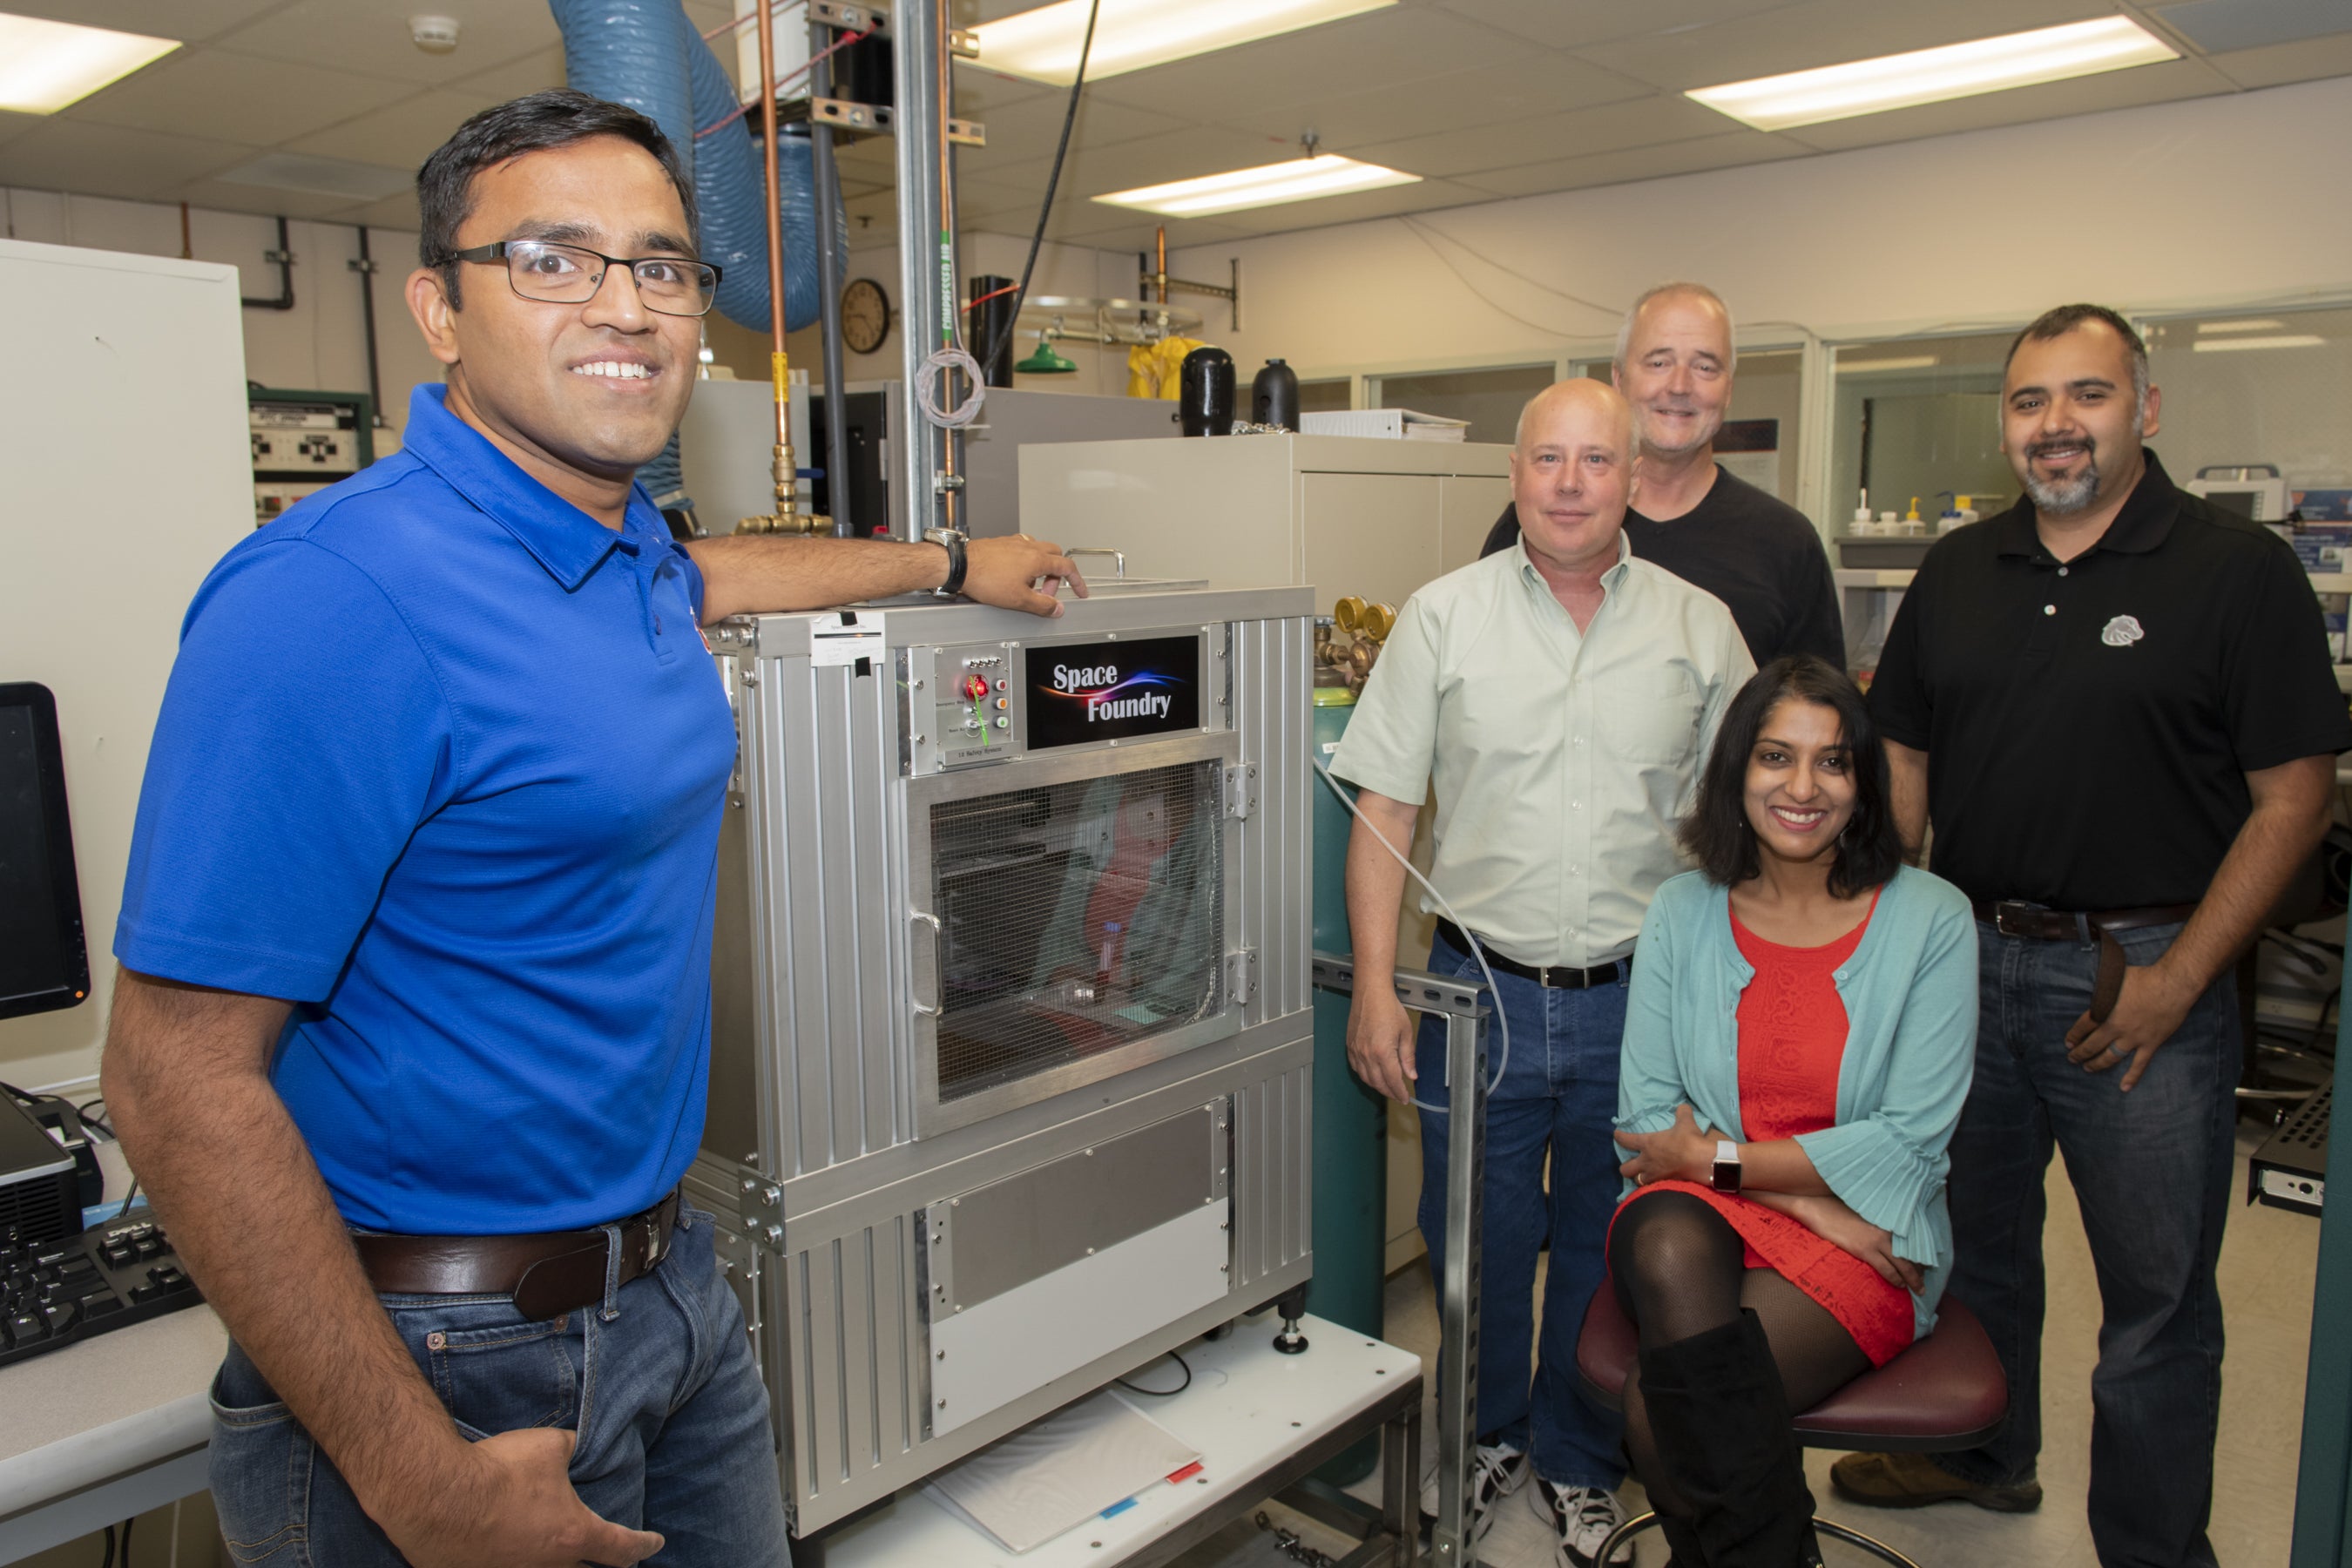 Photo of plasma jet team in lab by plasma jet printer